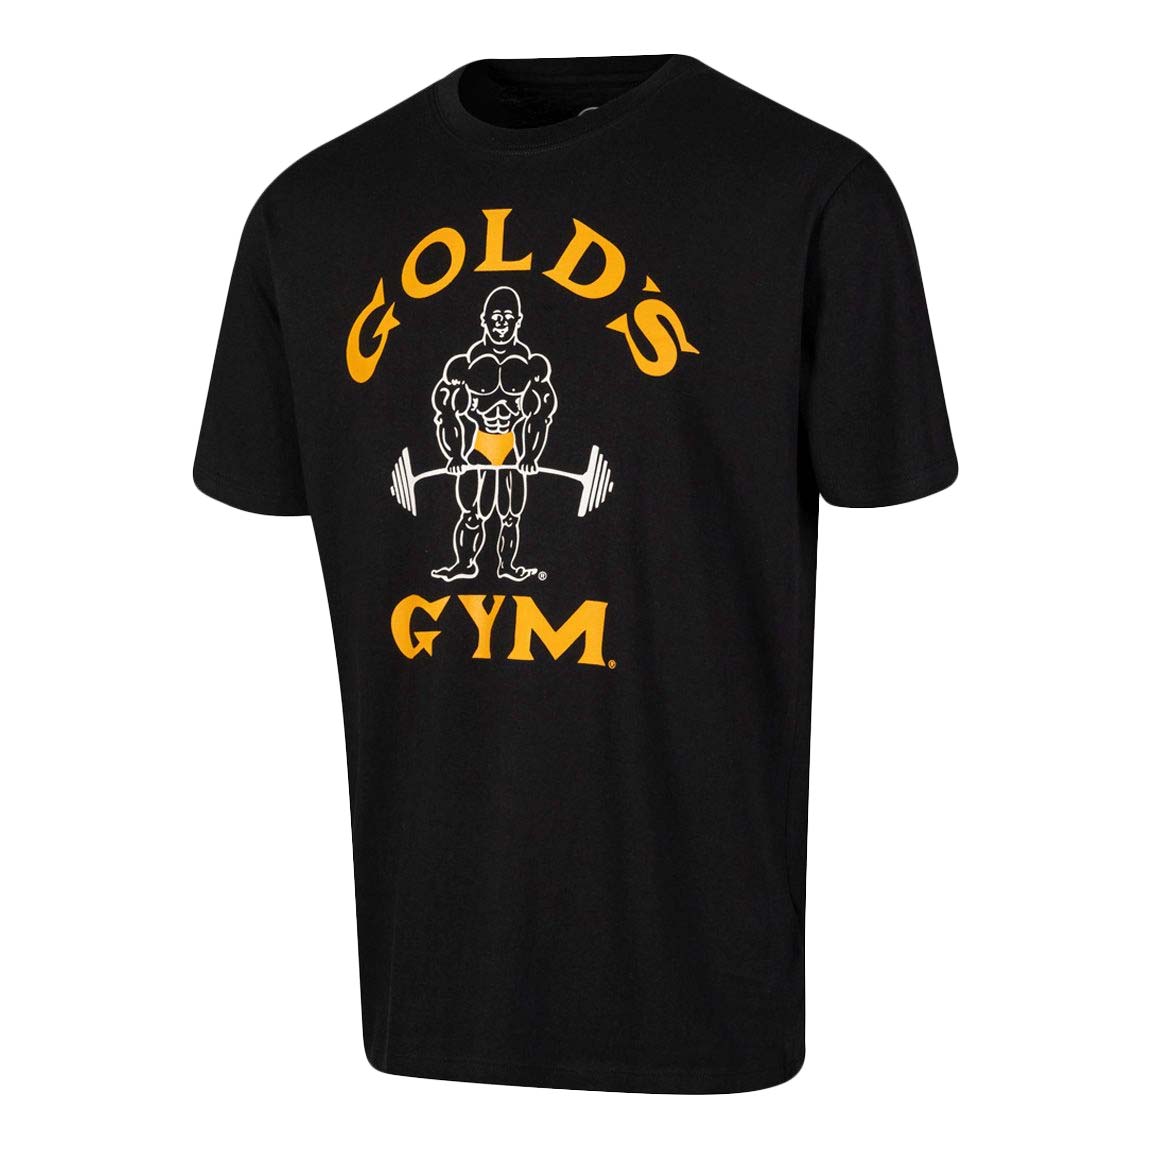 Gold's Gym Retro Muscle Joe T-Shirt - Black - Urban Gym Wear